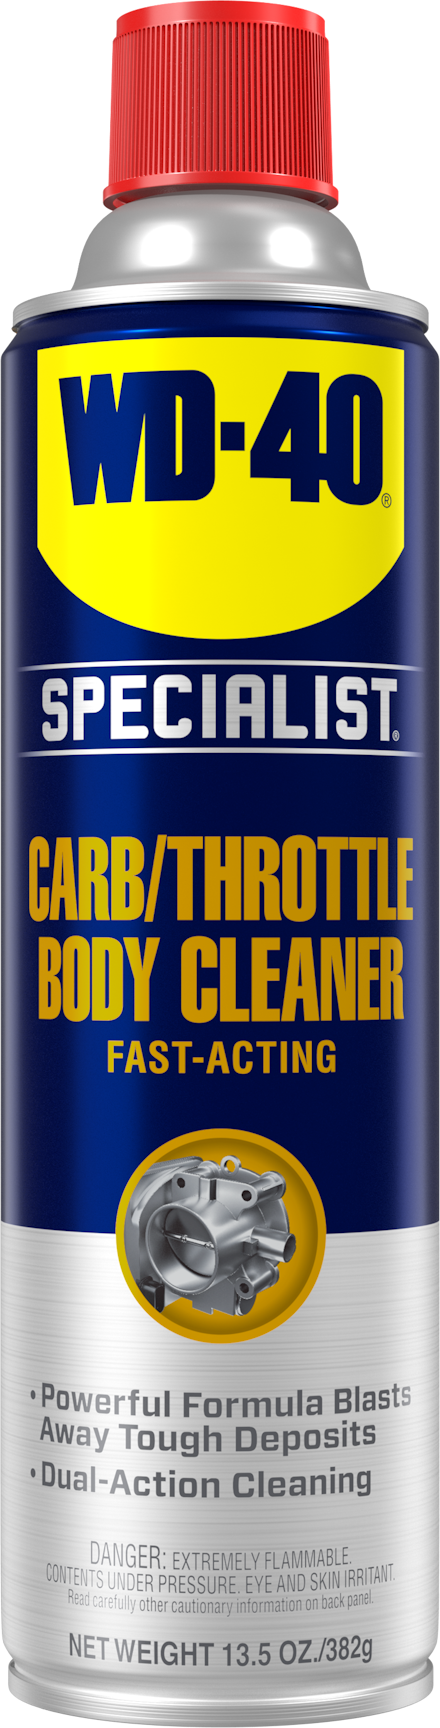 450ml Wholesale Carburetor & Choke Cleaner Spray Carb Cleaner